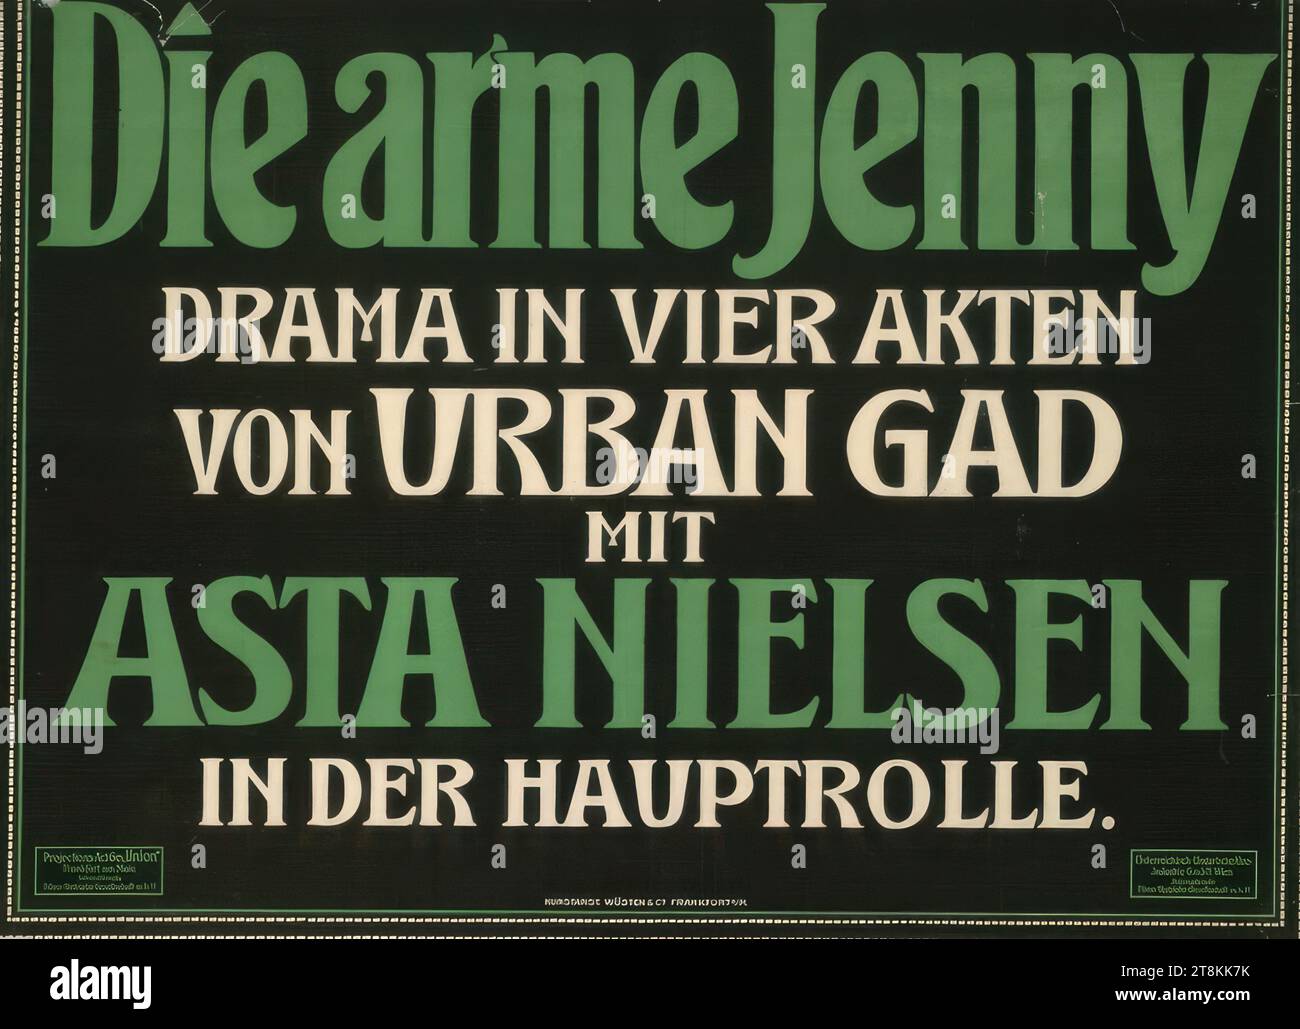 Poor Jenny; CON asta NIELSEN; "Union" Frankfurt am Main; Austro-Hungarian Cinema Industry G.m.b.H. Vienna, parte bassa, Anonymous, Around 1910, stampa, litografia a colori, foglio: 770 mm x 1055 mm, Austria Foto Stock